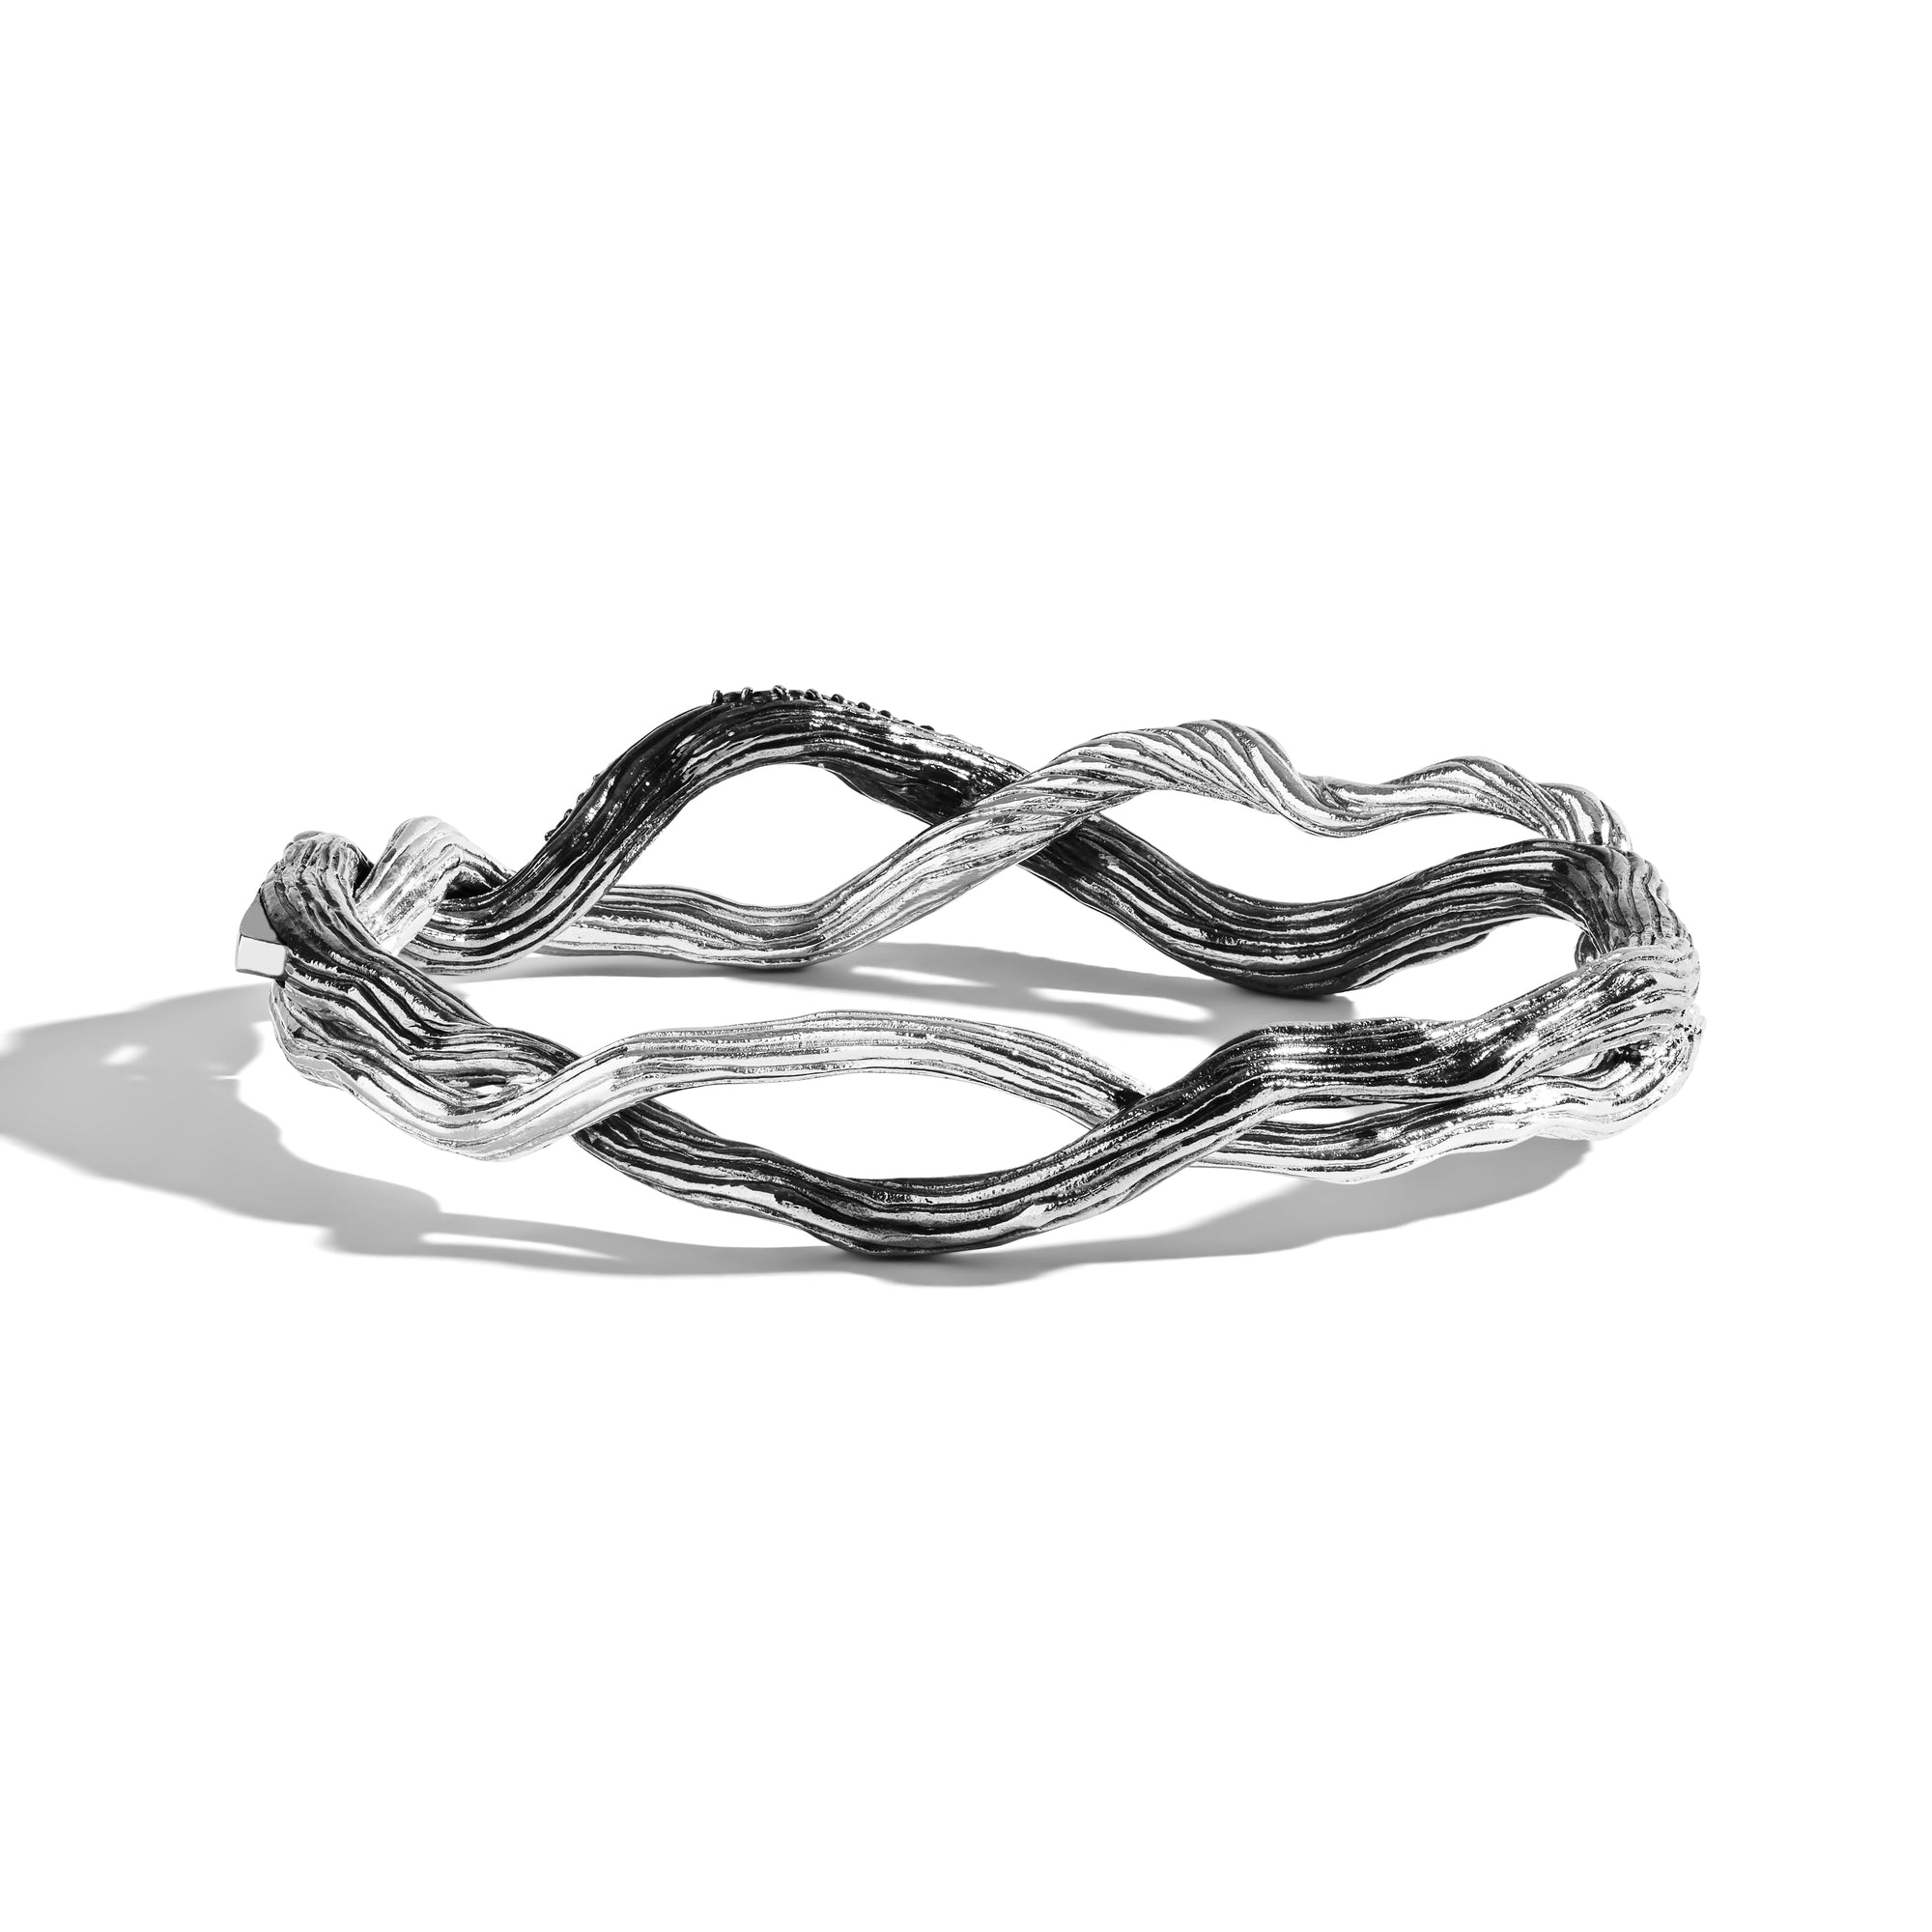 Michael Aram Wisteria Bracelet with Diamonds